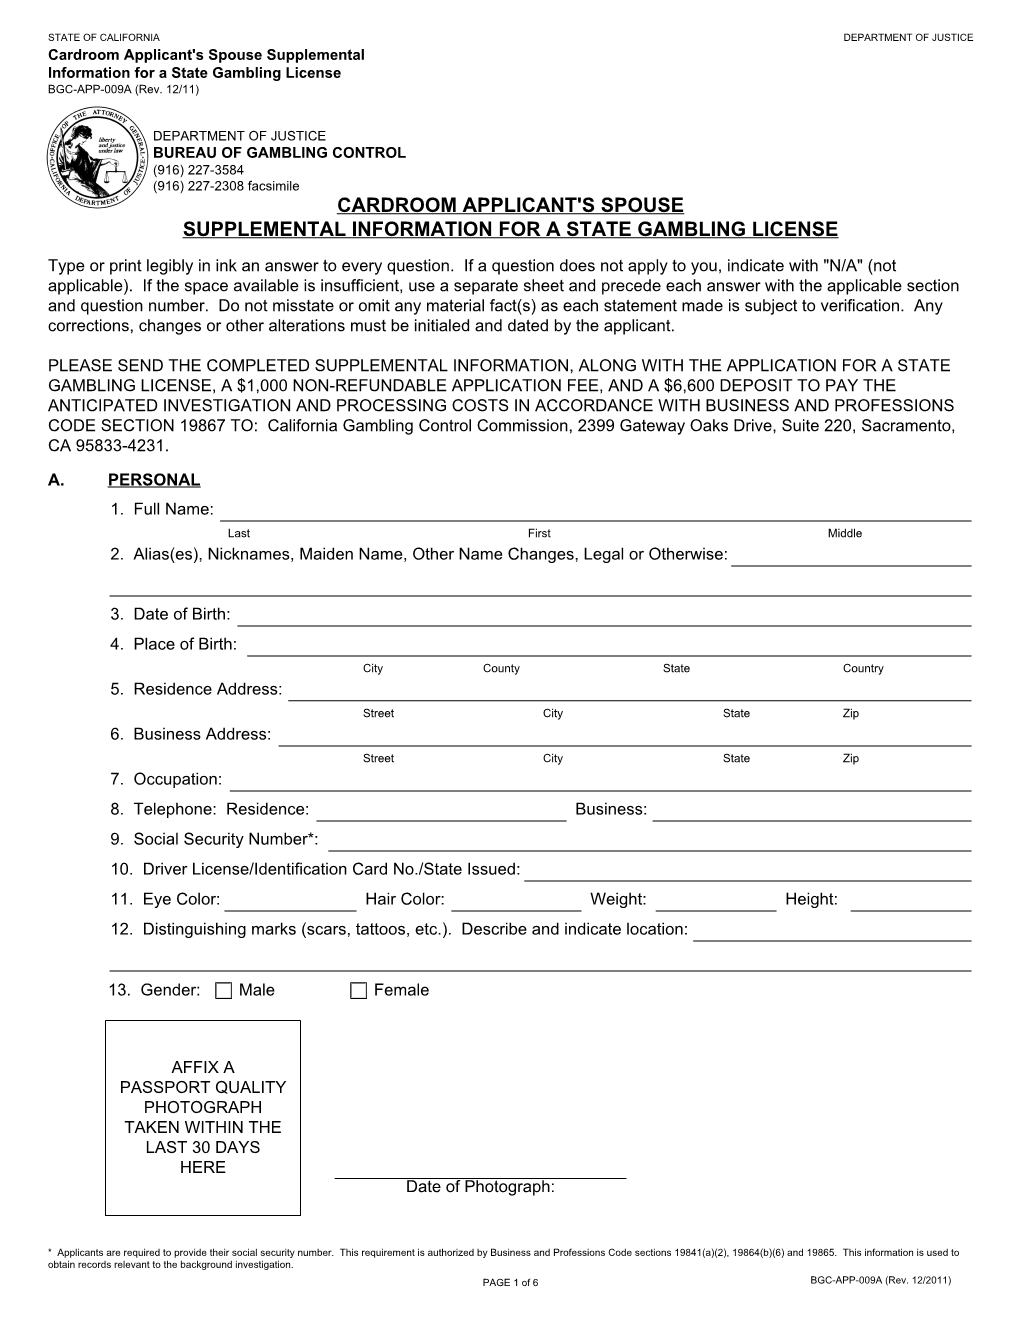 BGC-APP-009A, Cardroom Applicant's Spouse Supplemental